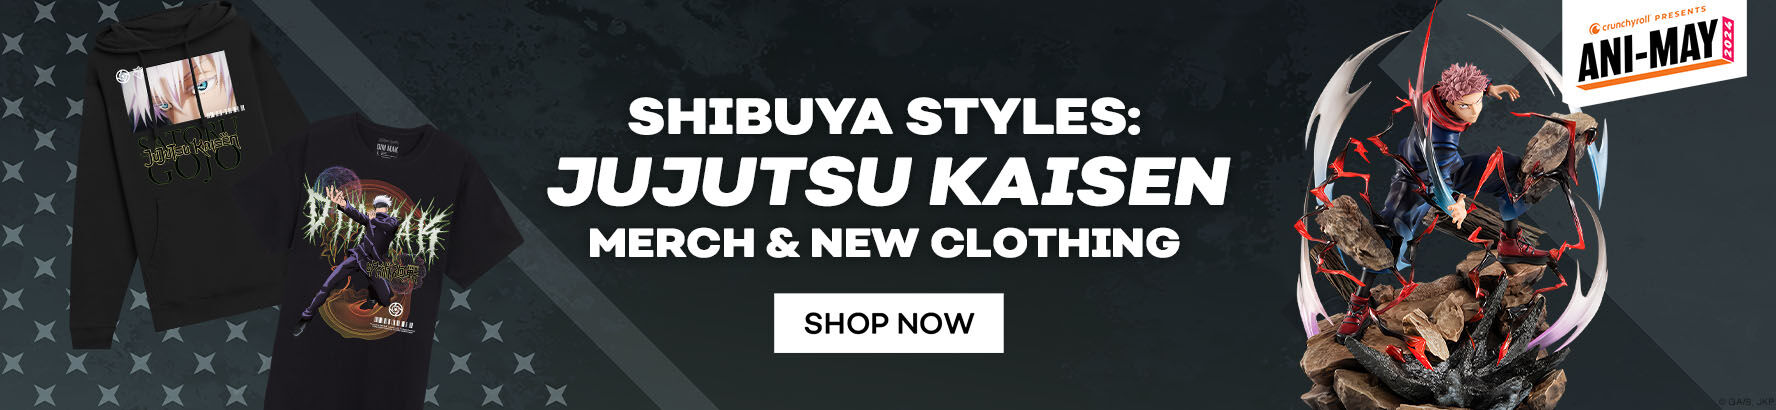  Shibuya Styles: Jujutsu Kaisen Merch & New Clothing - Shop Now